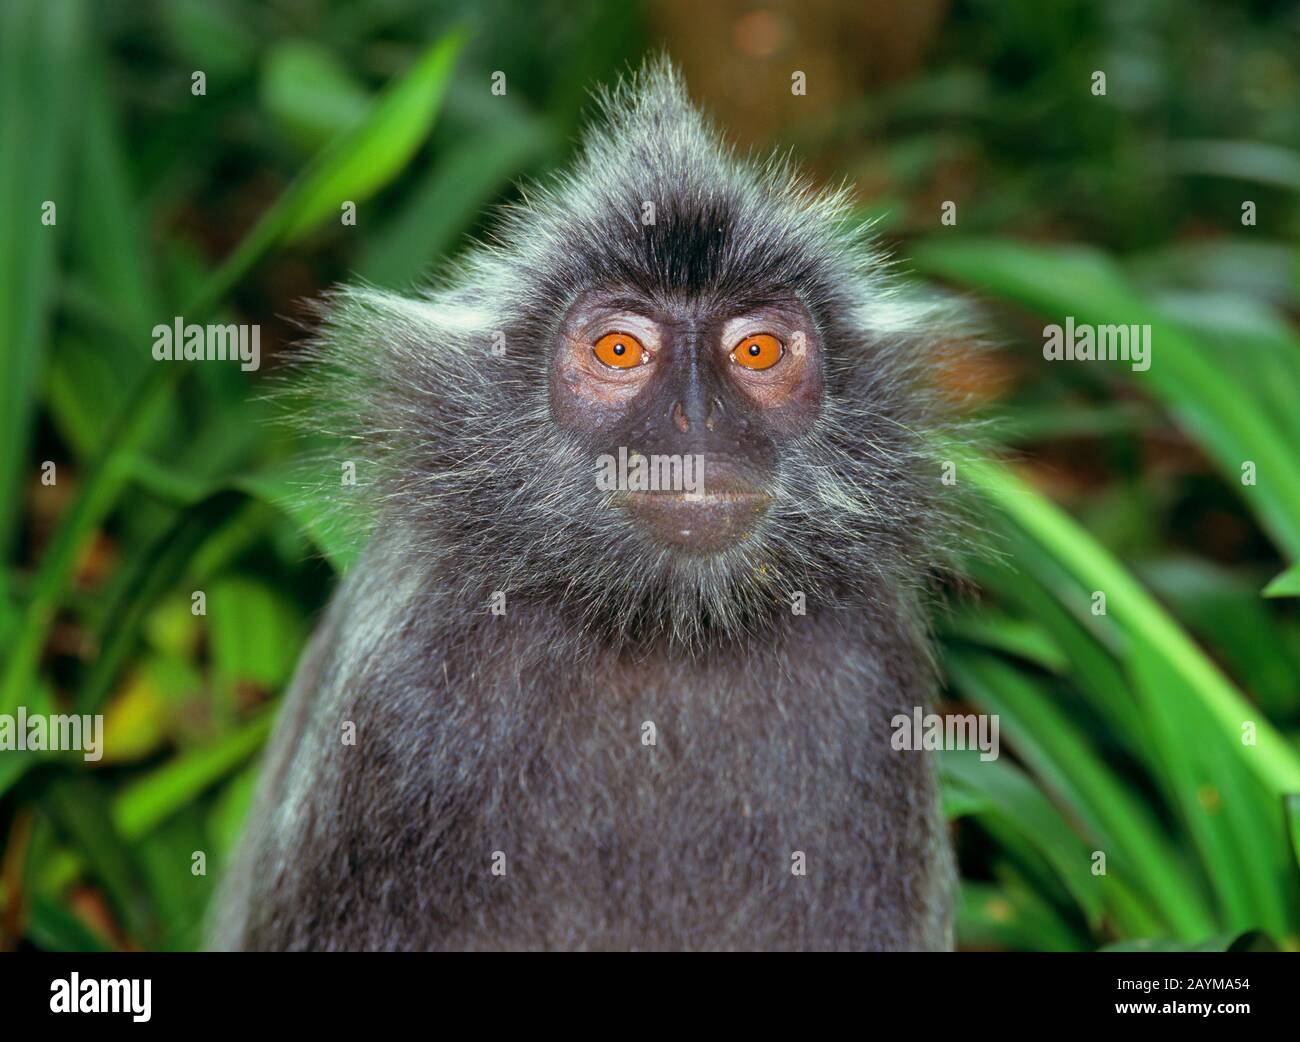 Dusky leaf-monkey, langur espectacular (Presbytis melalofos cruciguera), morfo gris, retrato Foto de stock